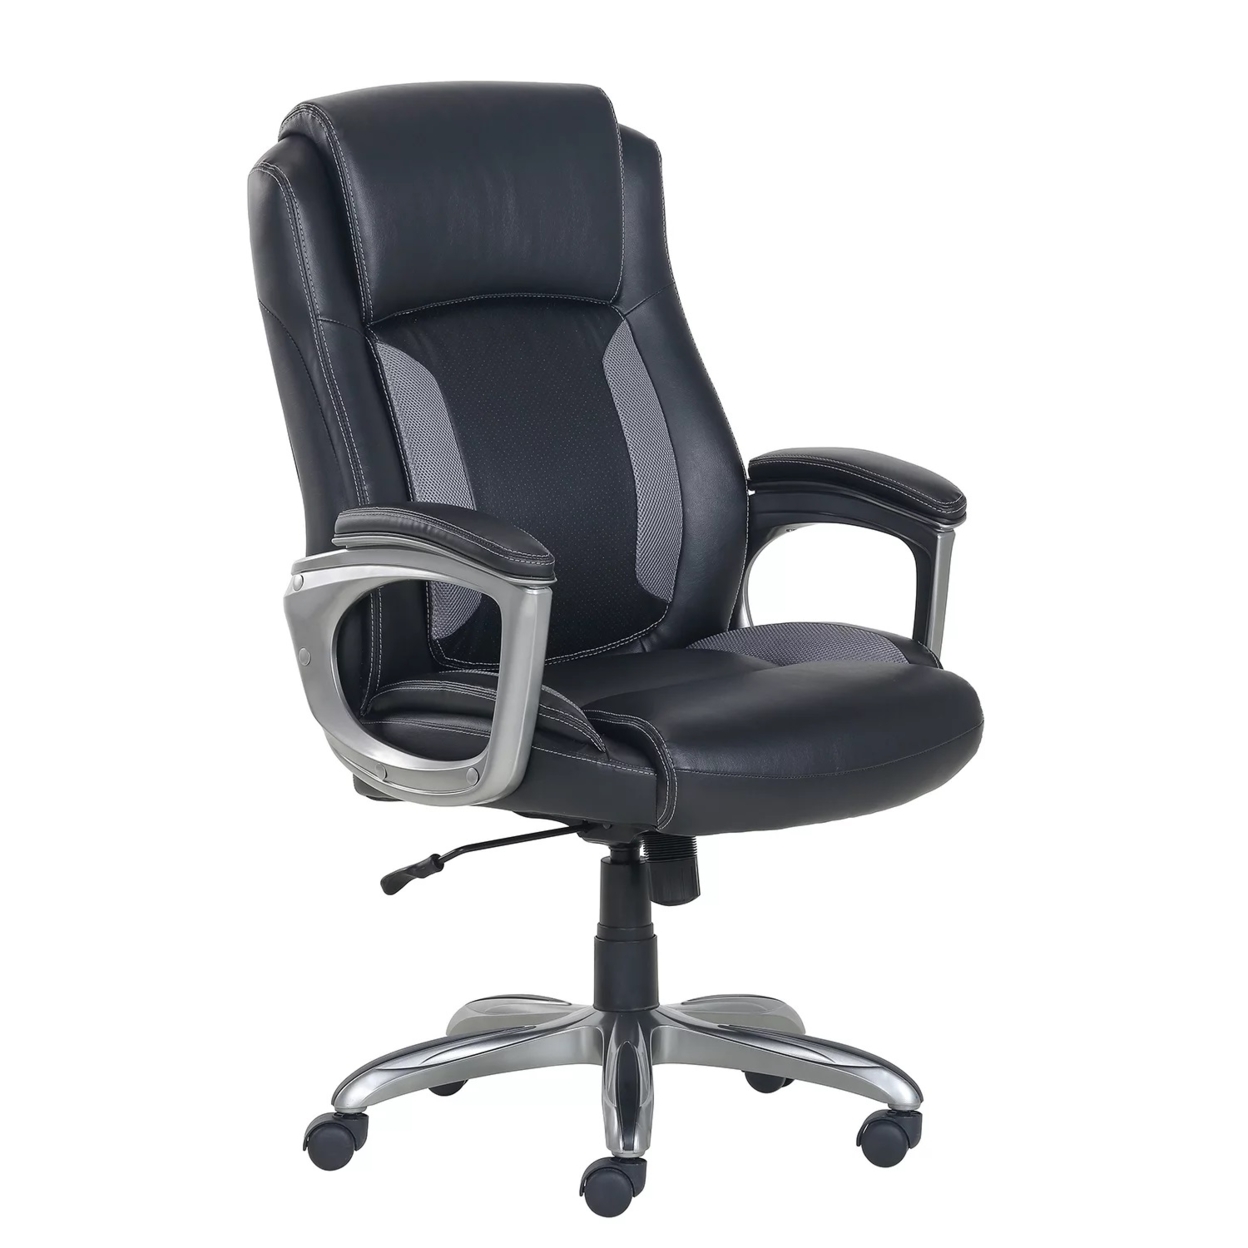 Serta Managerâs Office Chair, Black/Gray